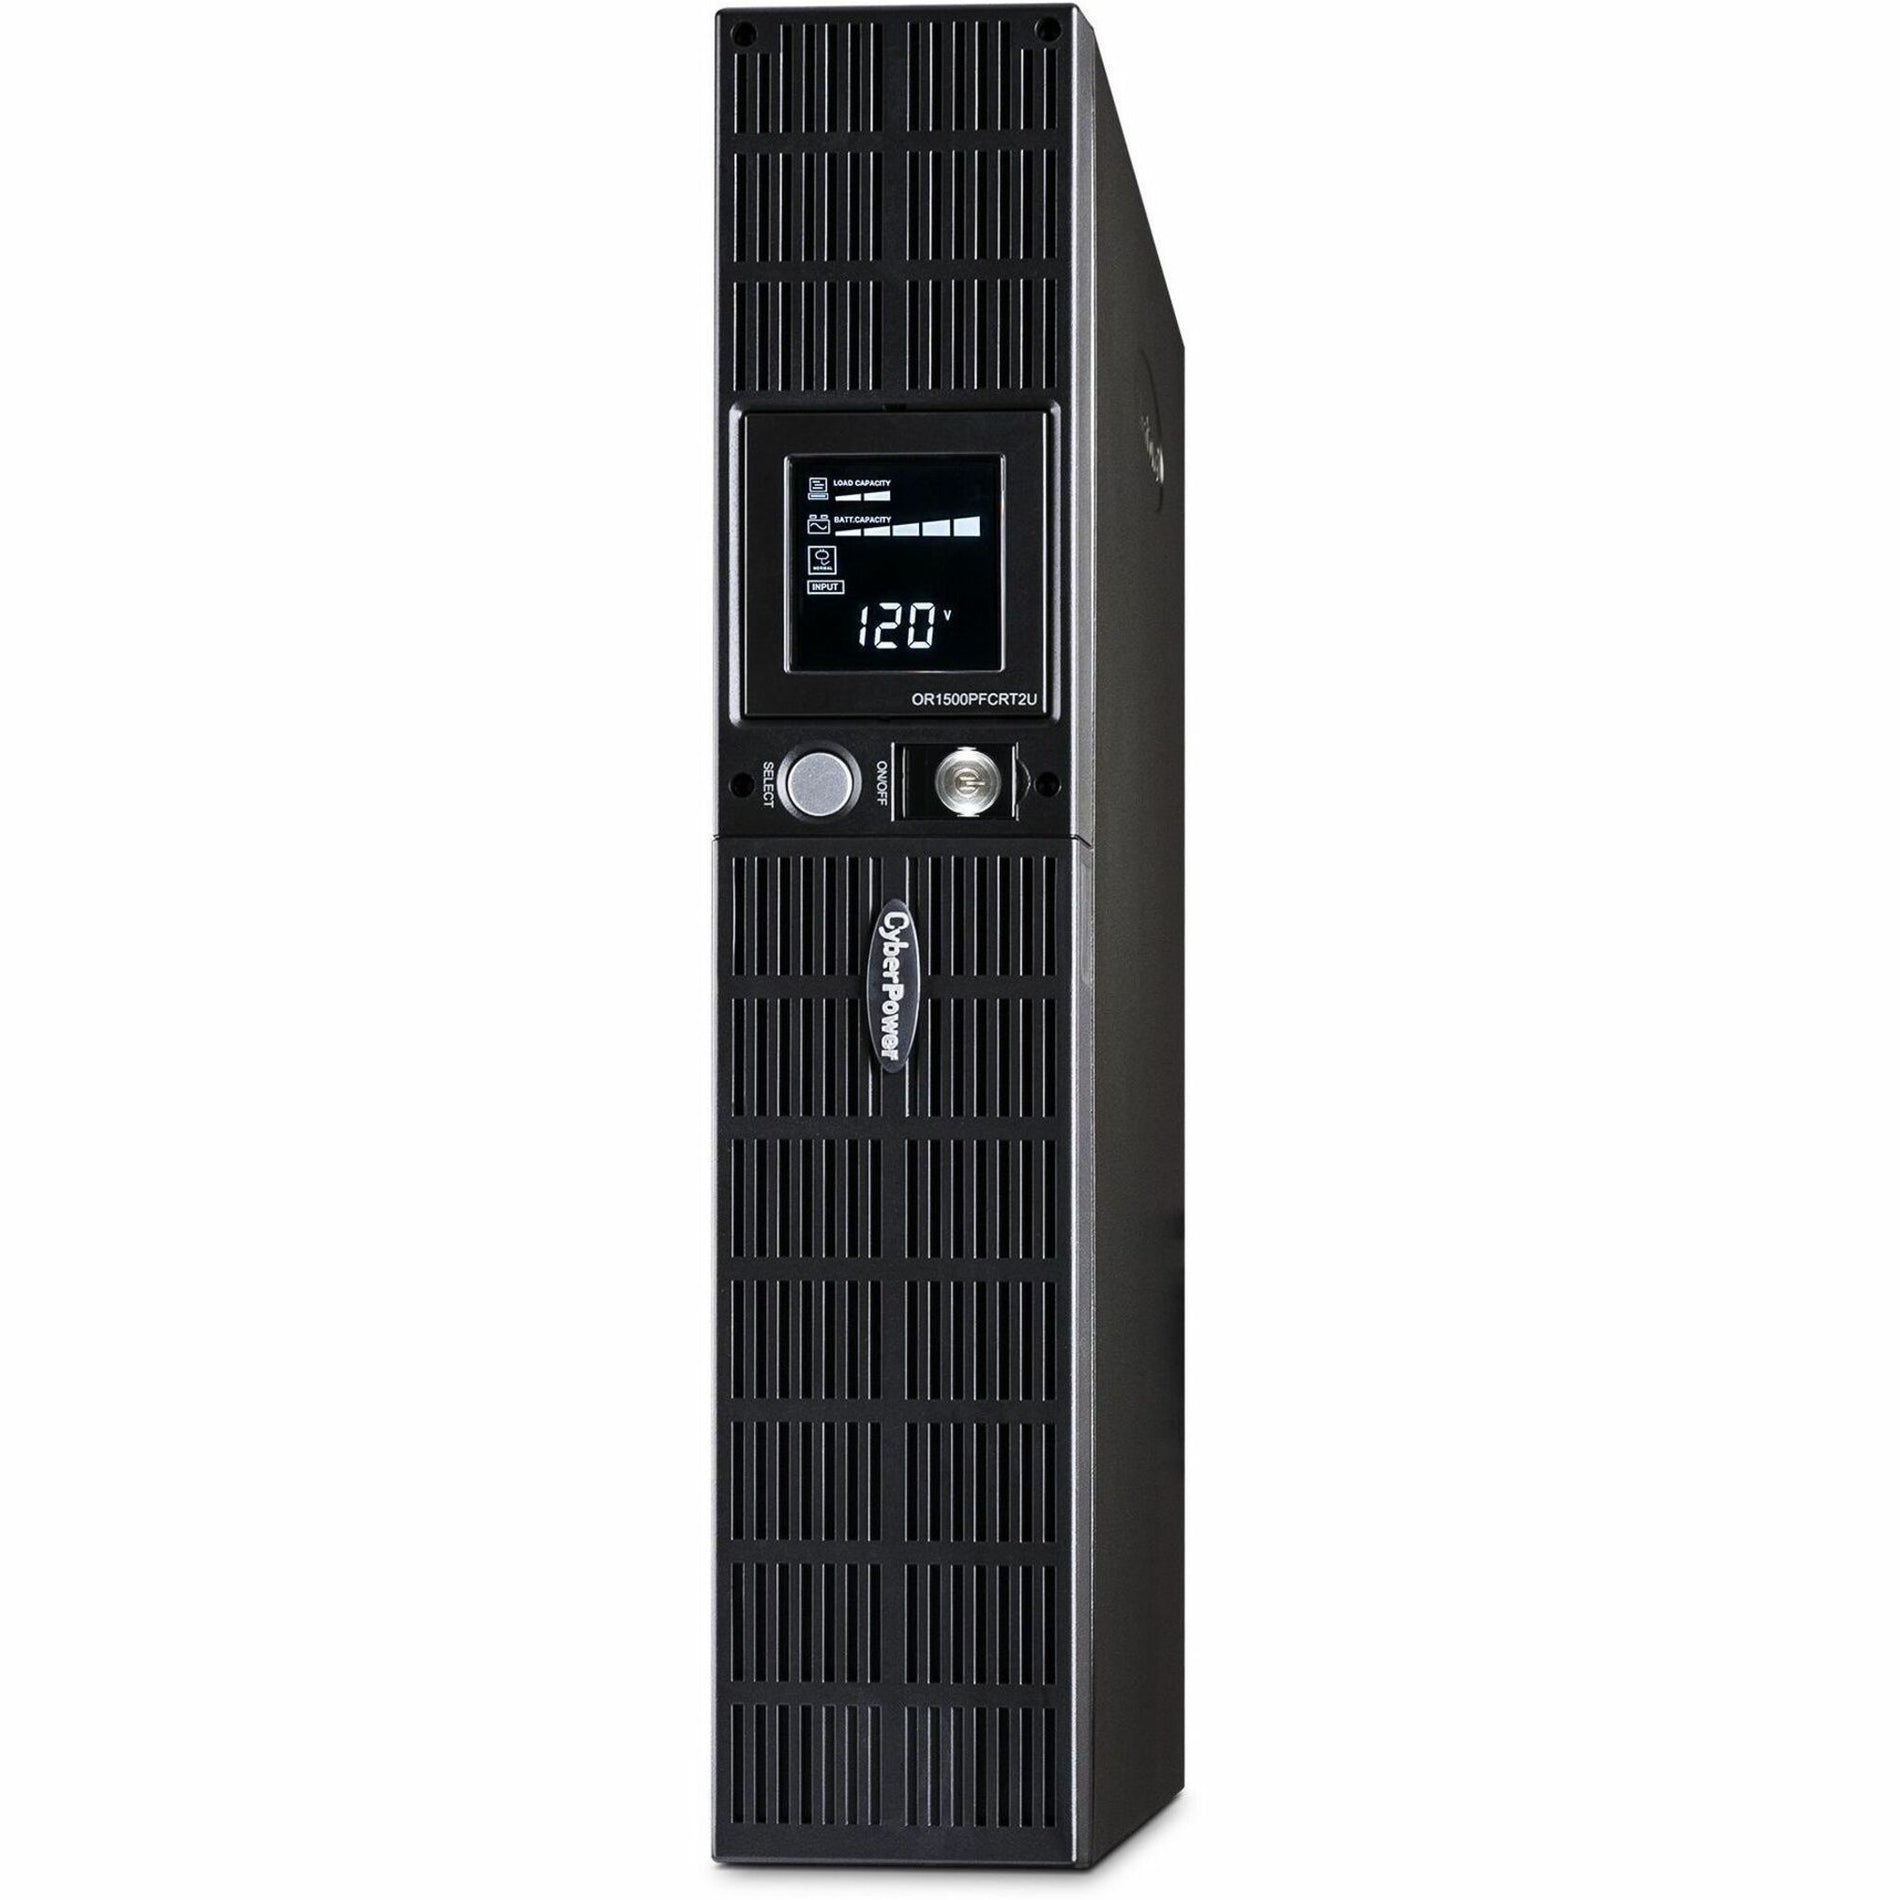 CyberPower OR1500PFCRT2U PFC Sinewave UPS System 1500VA 900W Rack/Tower, Pure Sine Wave, 3 Year Warranty